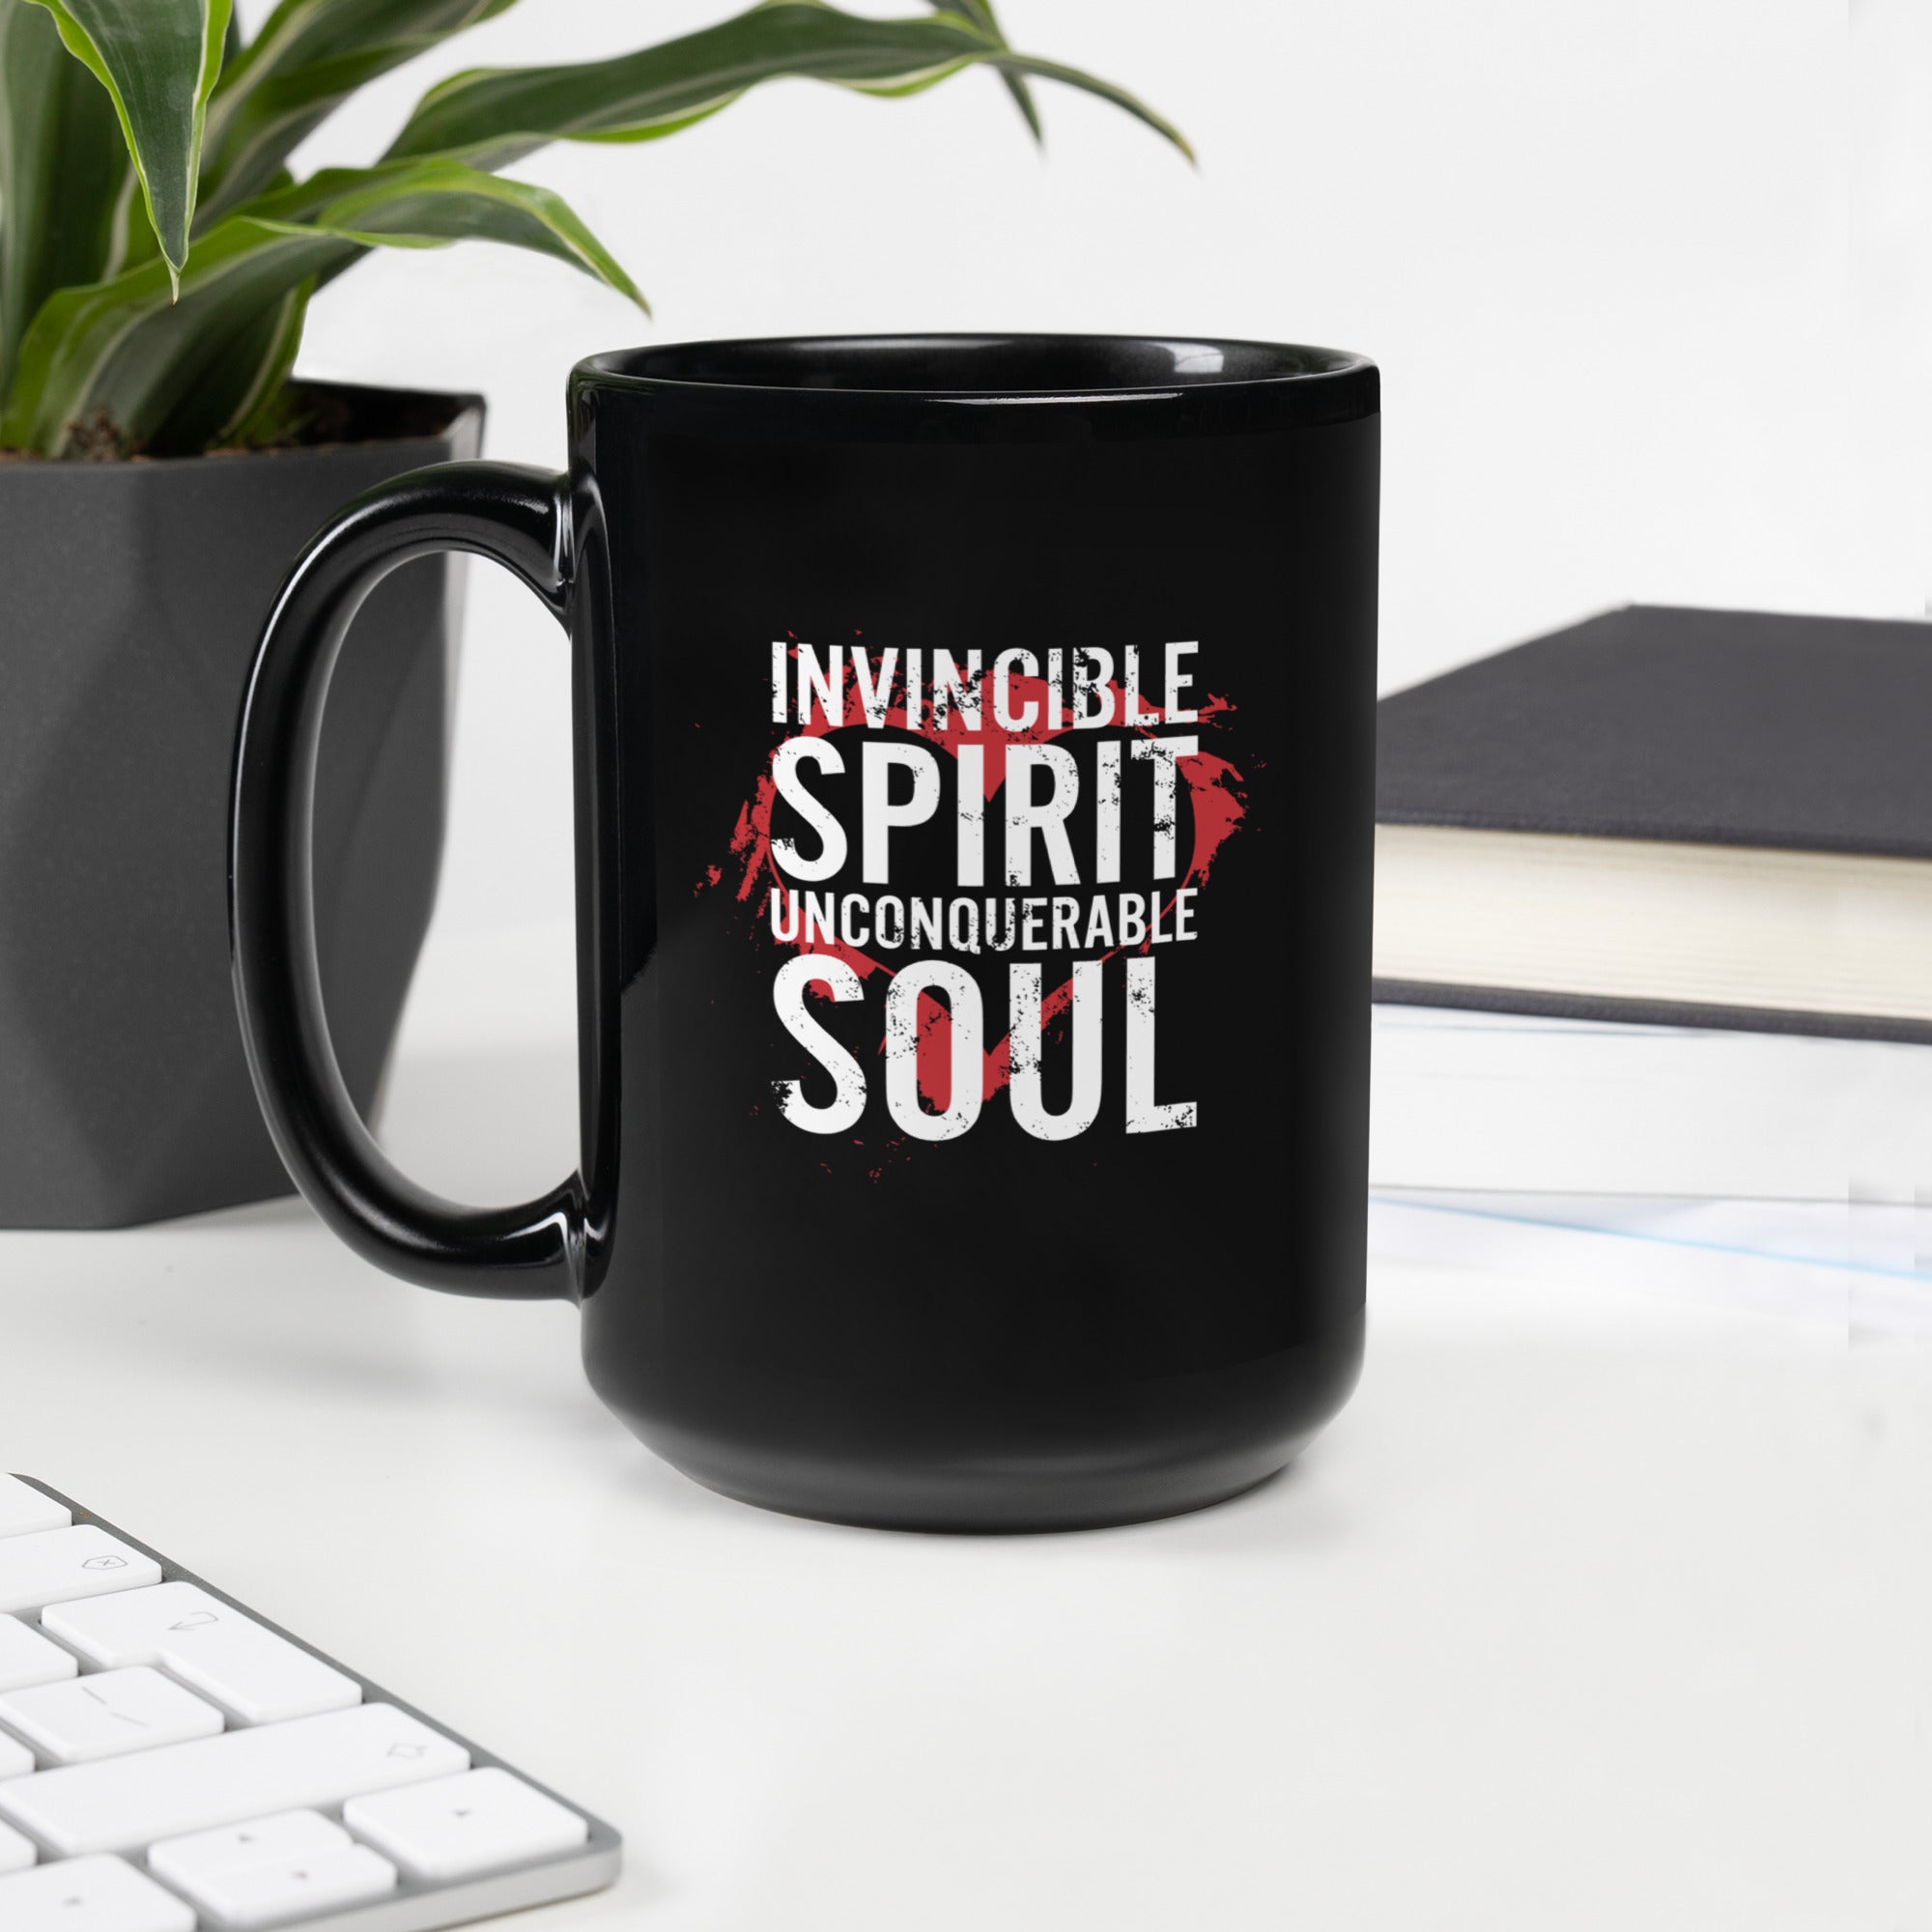 Invincible Spirit Unconquerable Soul Mug